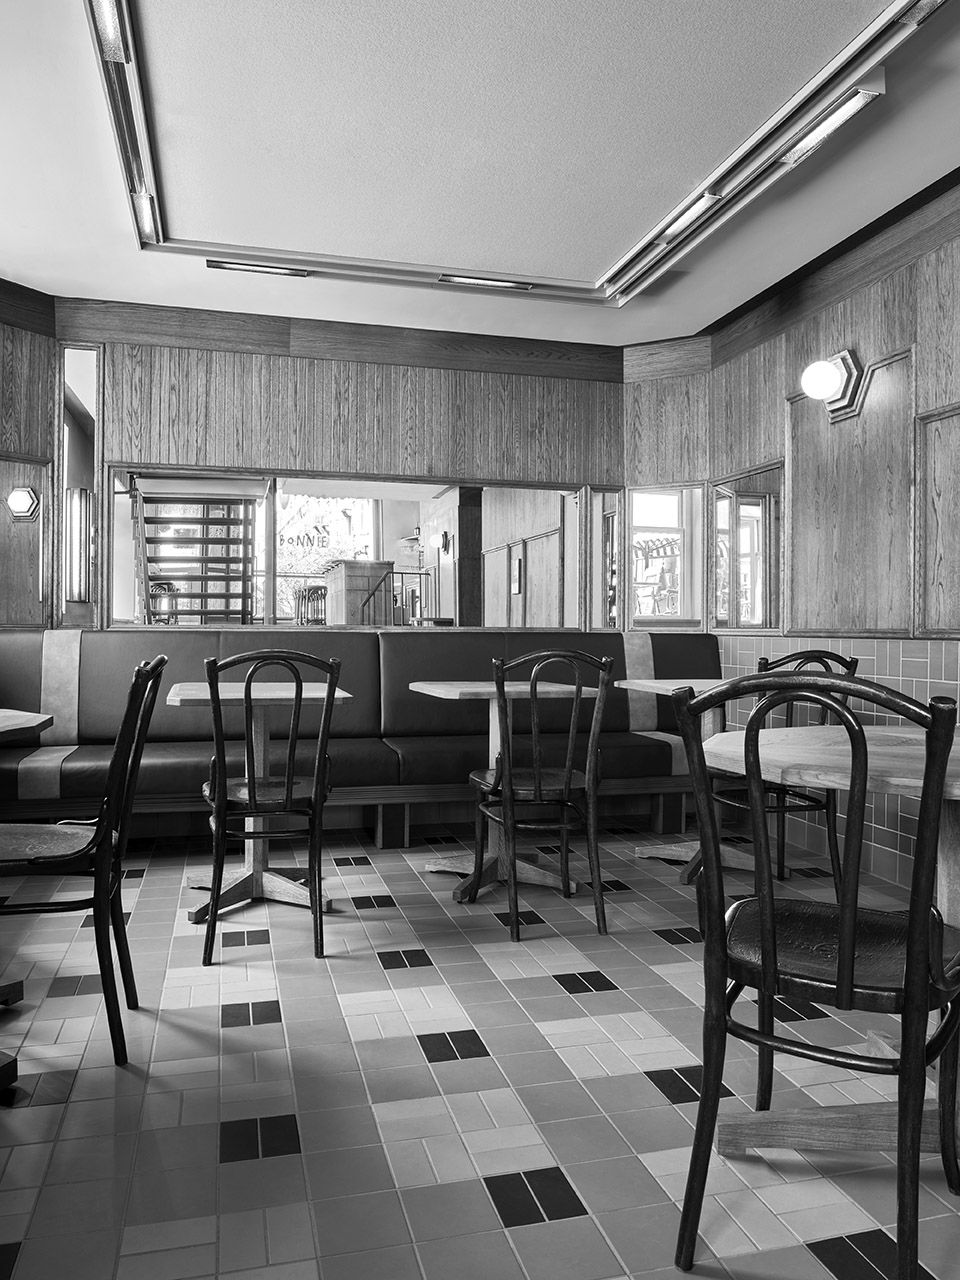 Bonnie酒吧，阿姆斯特丹/在旧式风格和温暖的亲切感之间取得完美平衡-77